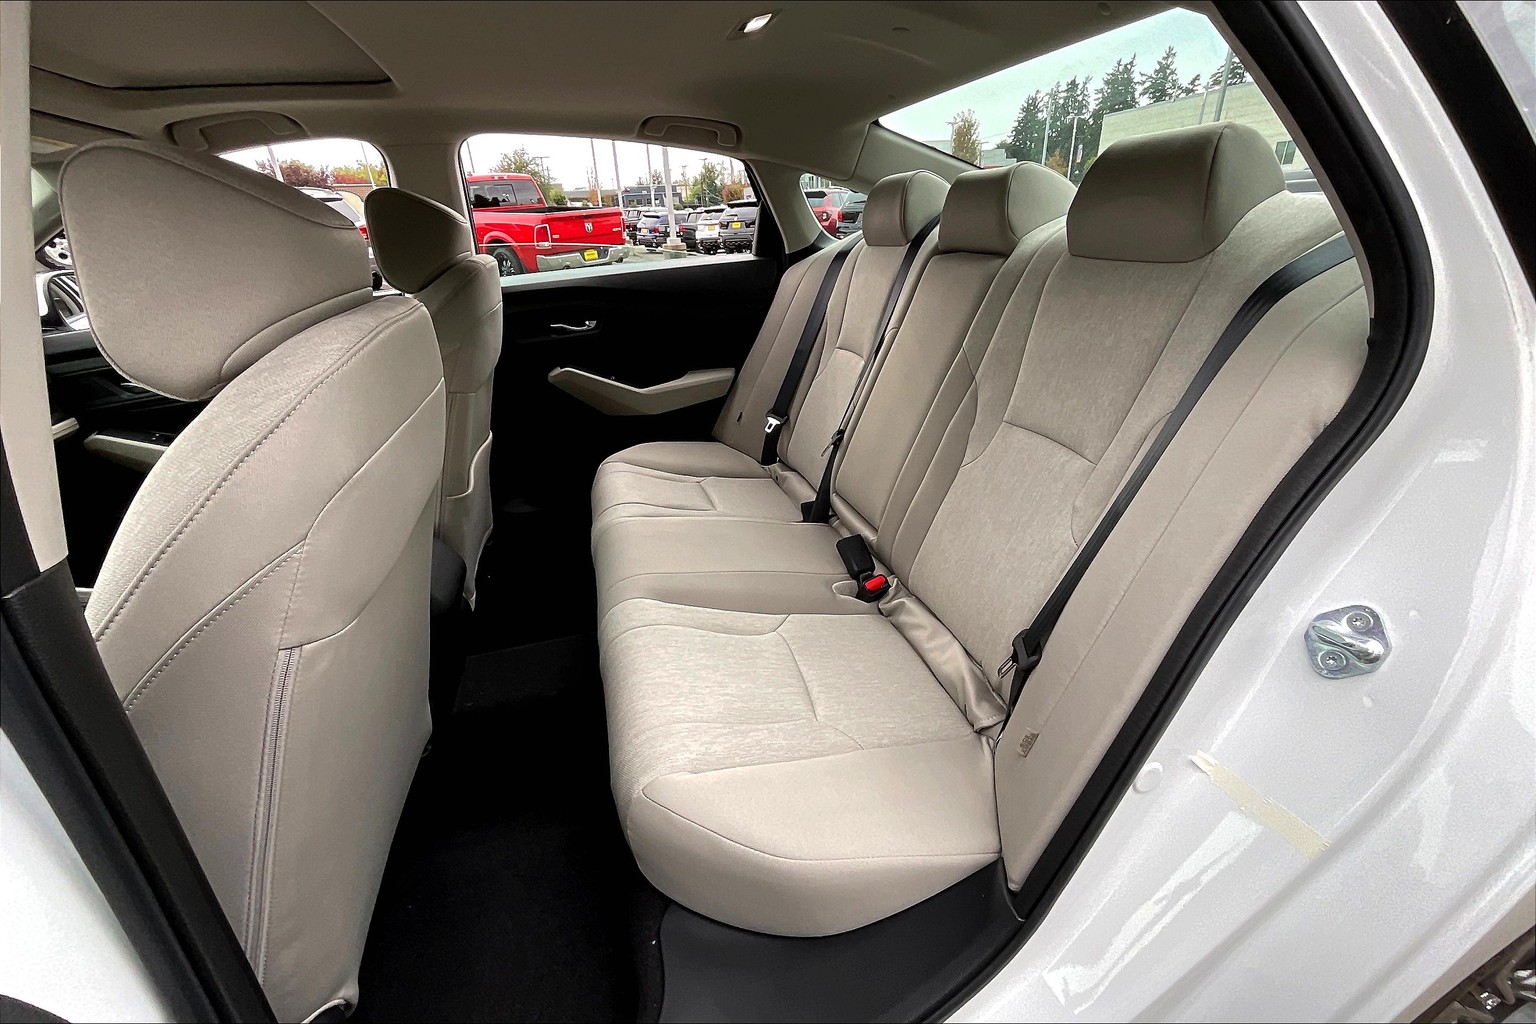 5 Car Seat Covers For Hyundai Kia Civic Corolla Honda Accord Camry